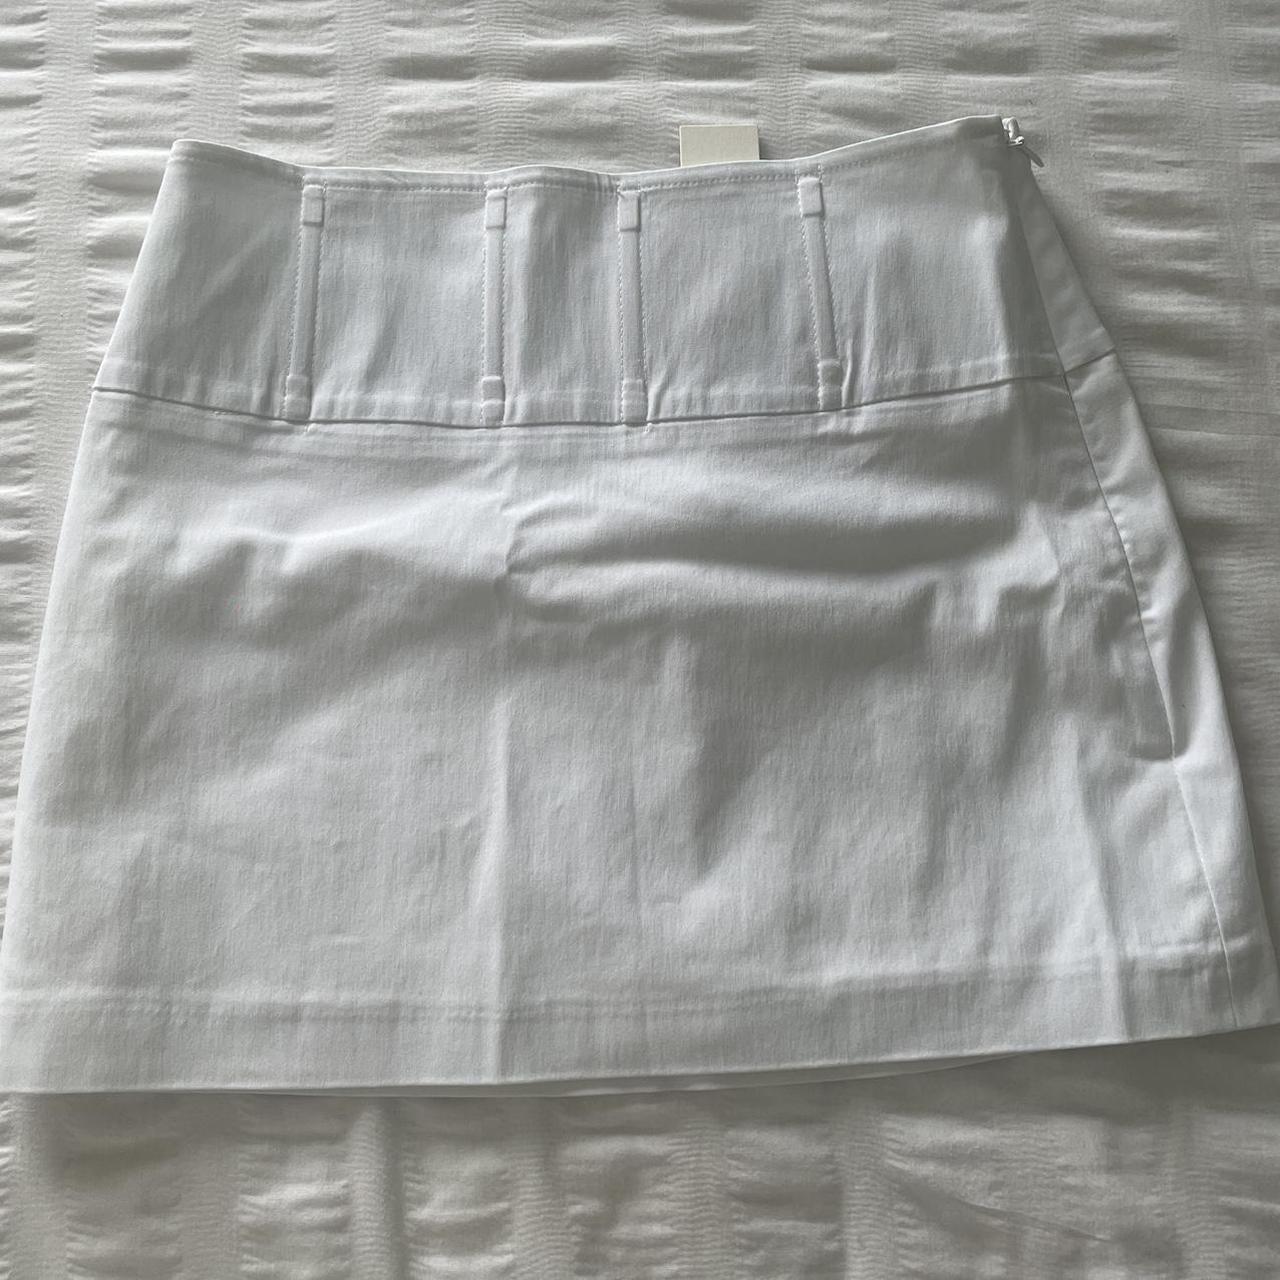 Glassons white mini skirt. Tags still on. Size 6 - Depop